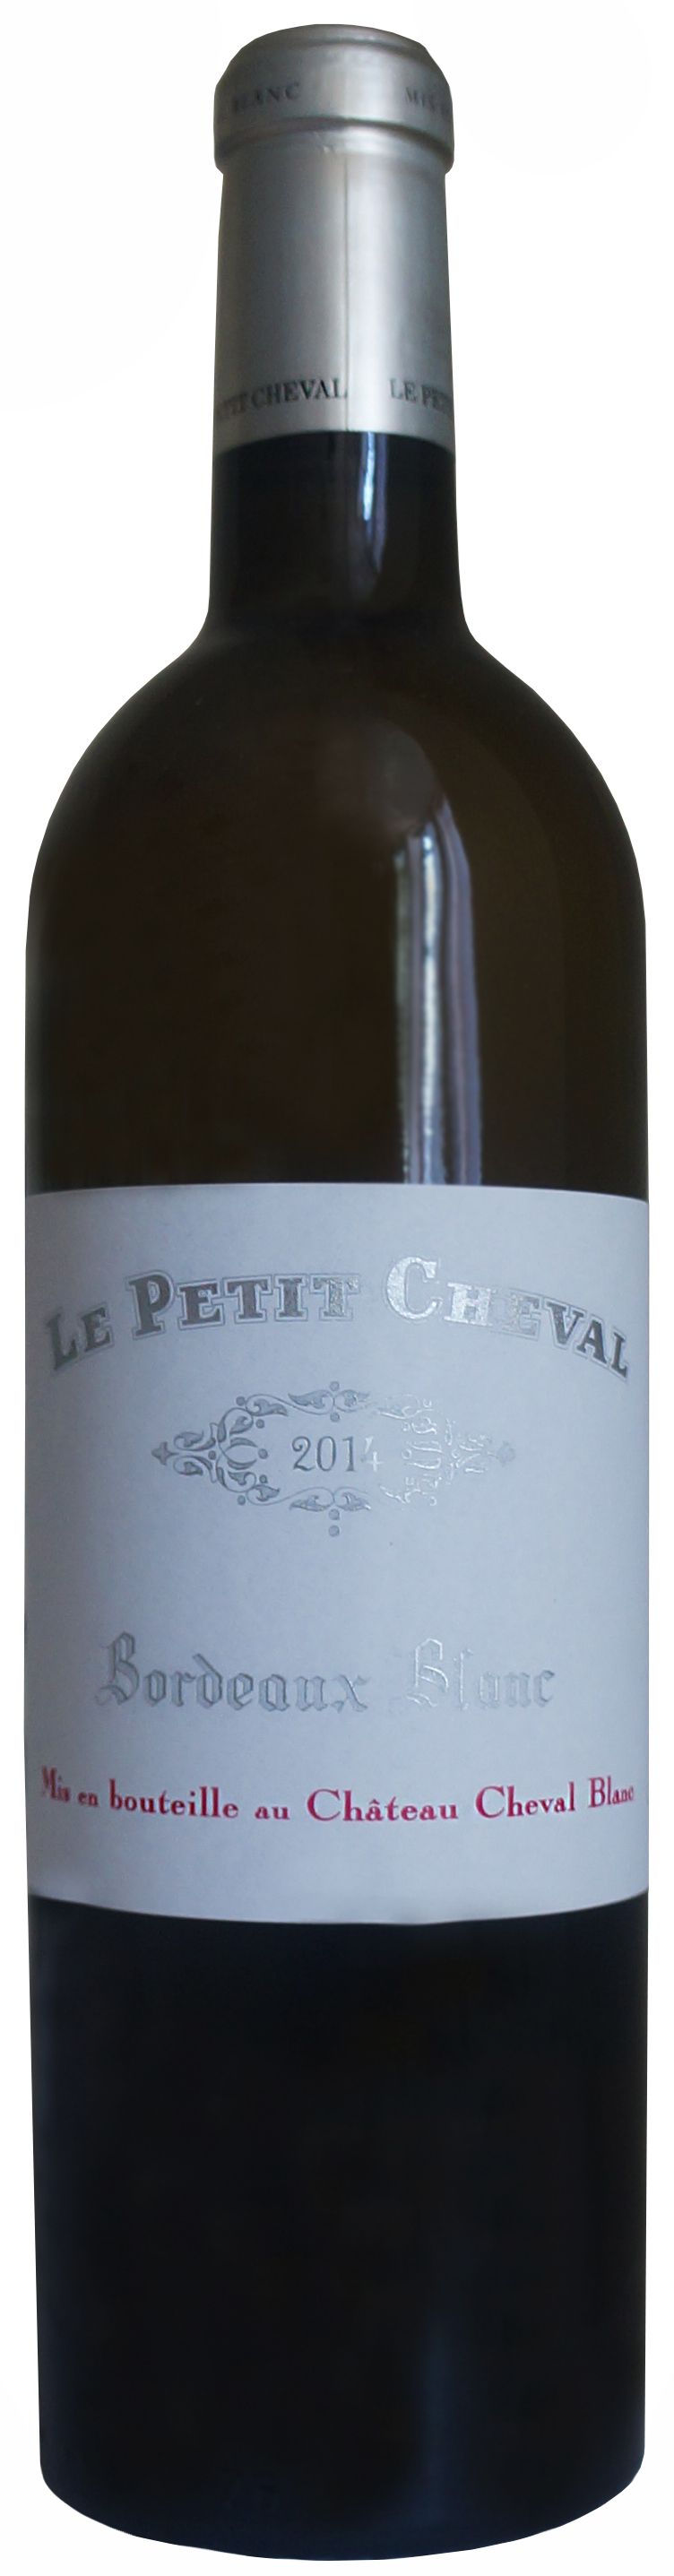 Chateau Cheval Blanc, Le Petit Cheval Blanc, 2014